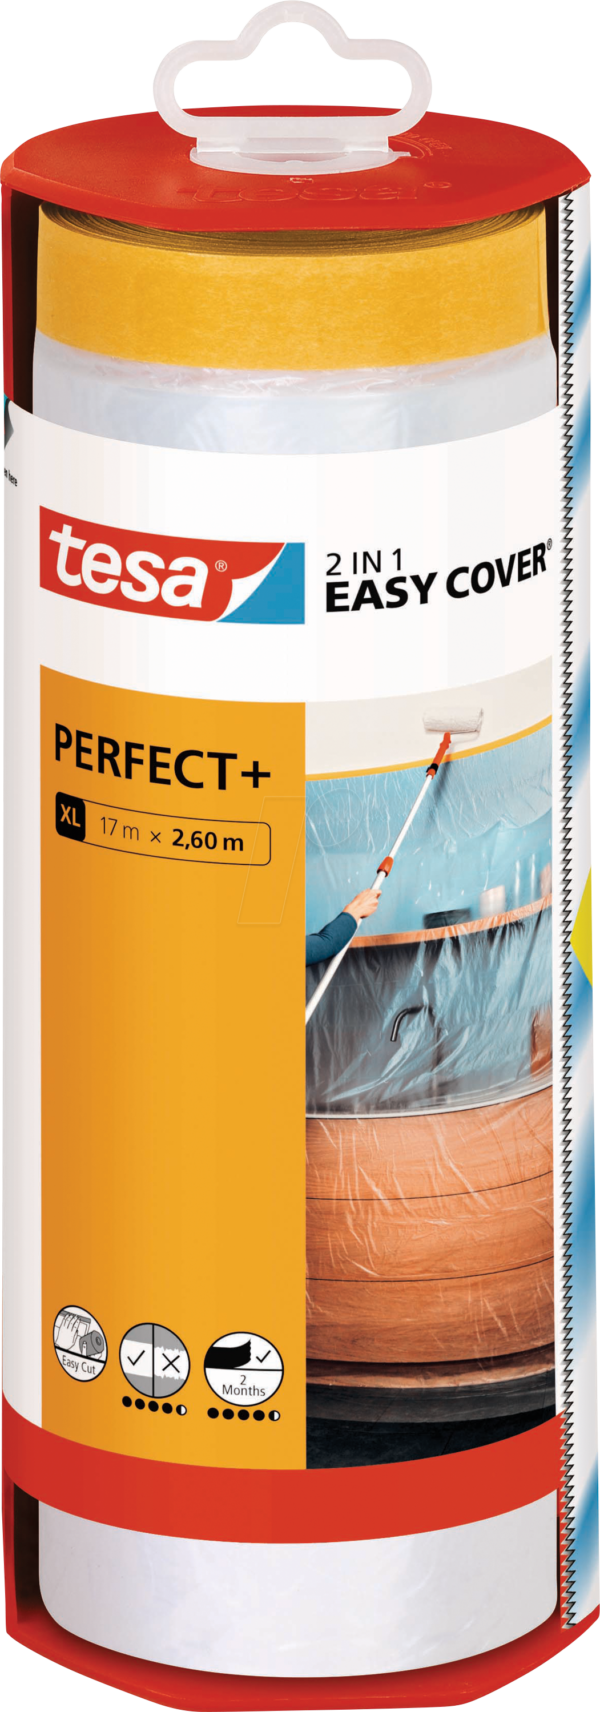 TESA 56572 - Malerband mit Abdeckfolie tesa Easy Cover Perfect+ 17 m x 2